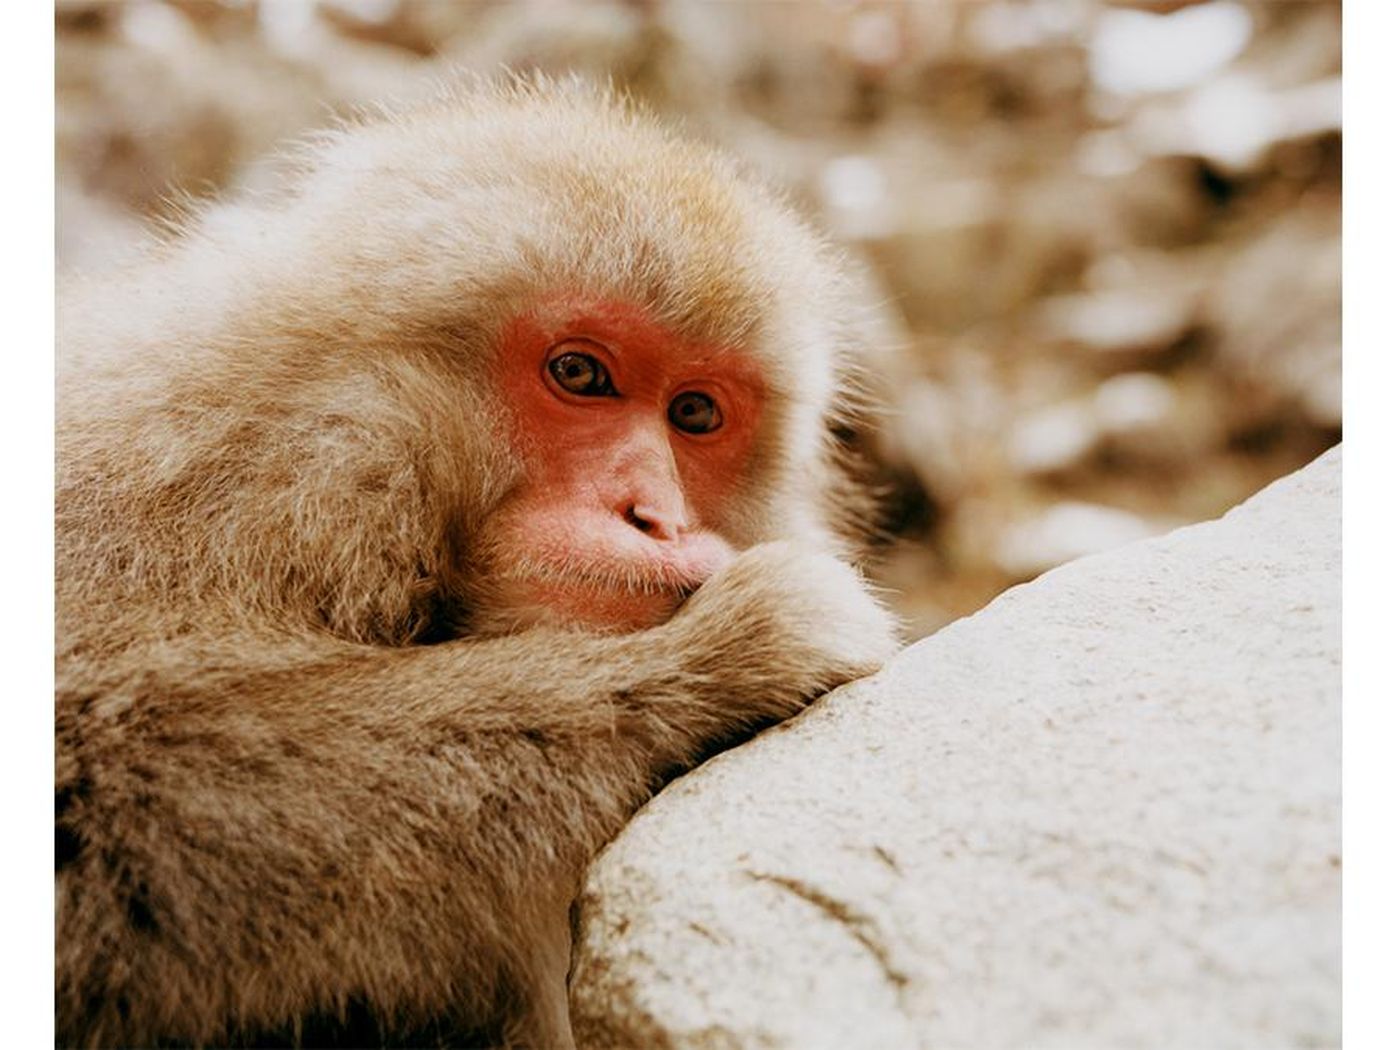 OPENER - female macaque